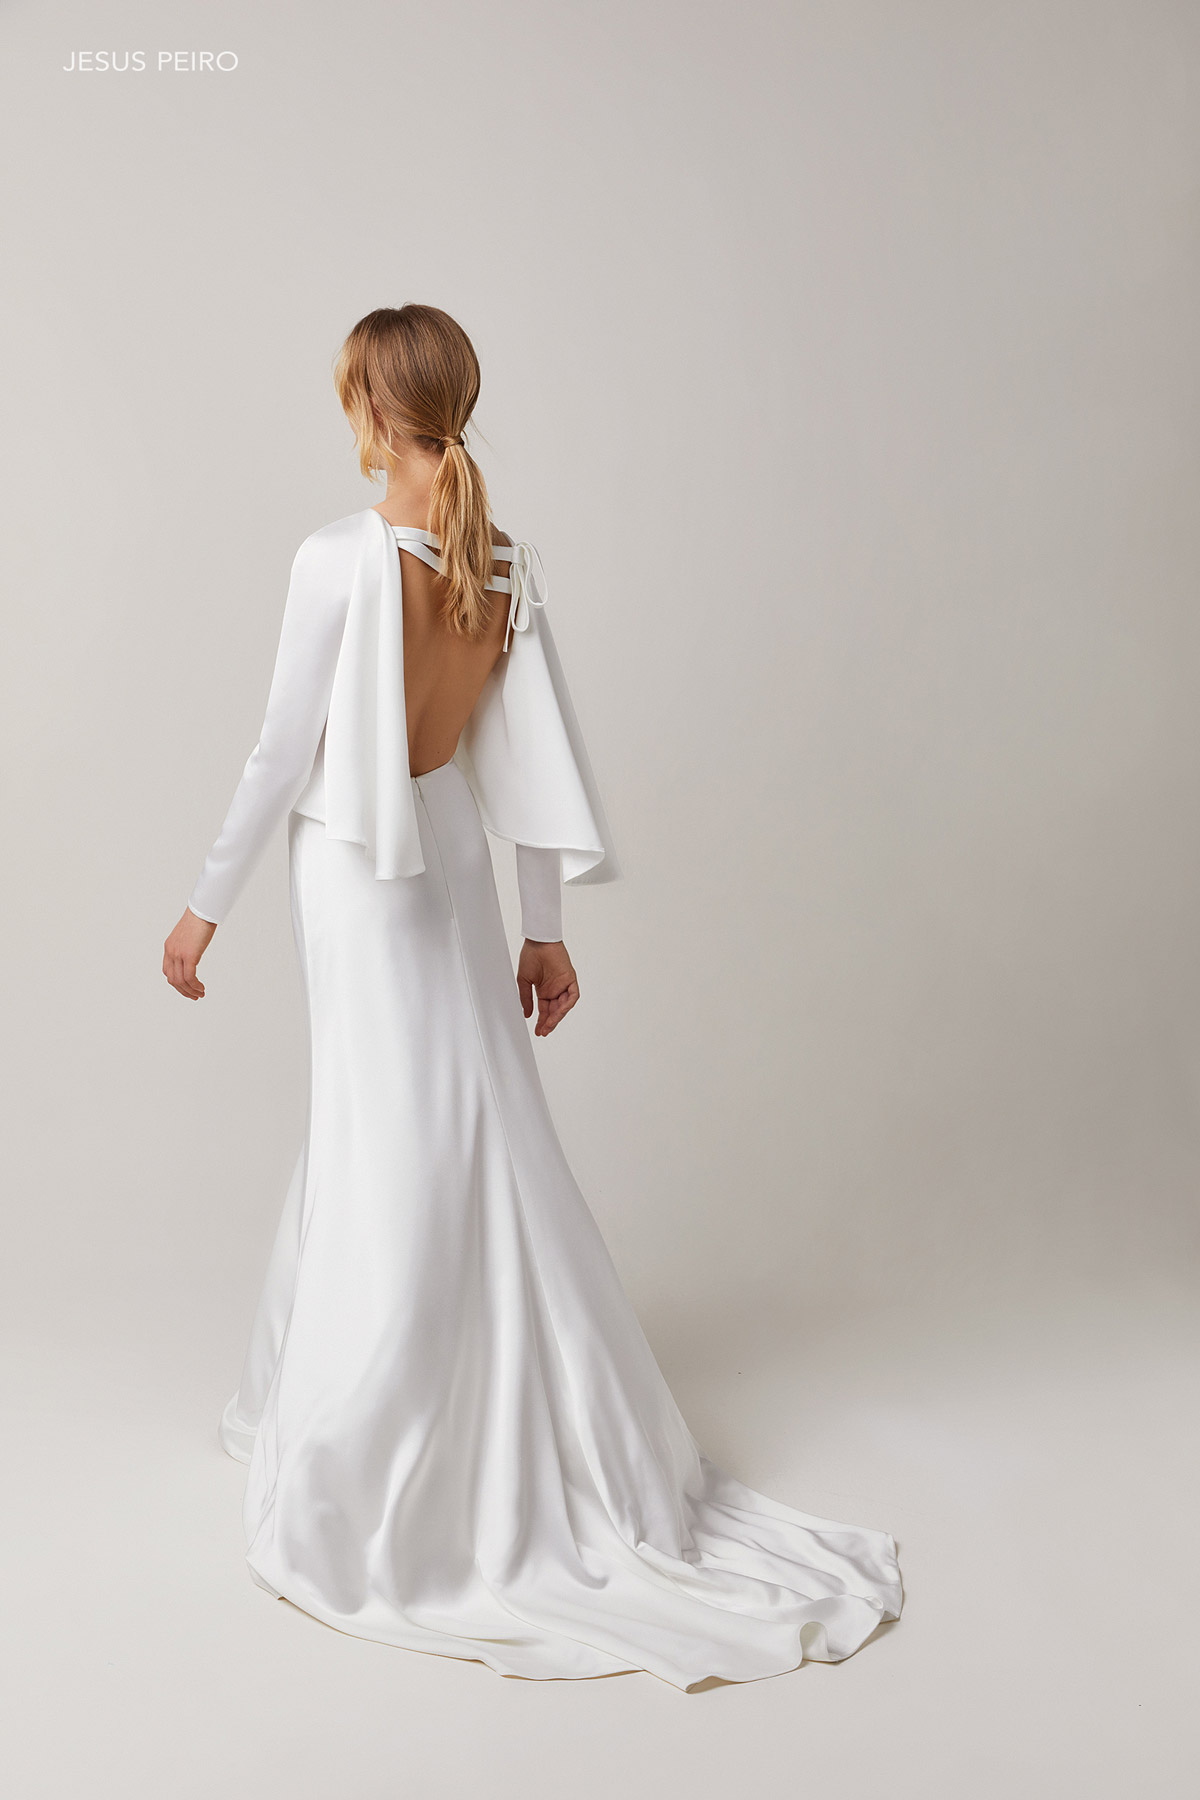 Vestidos de novia con espalda descubierta | JESUS PEIRO